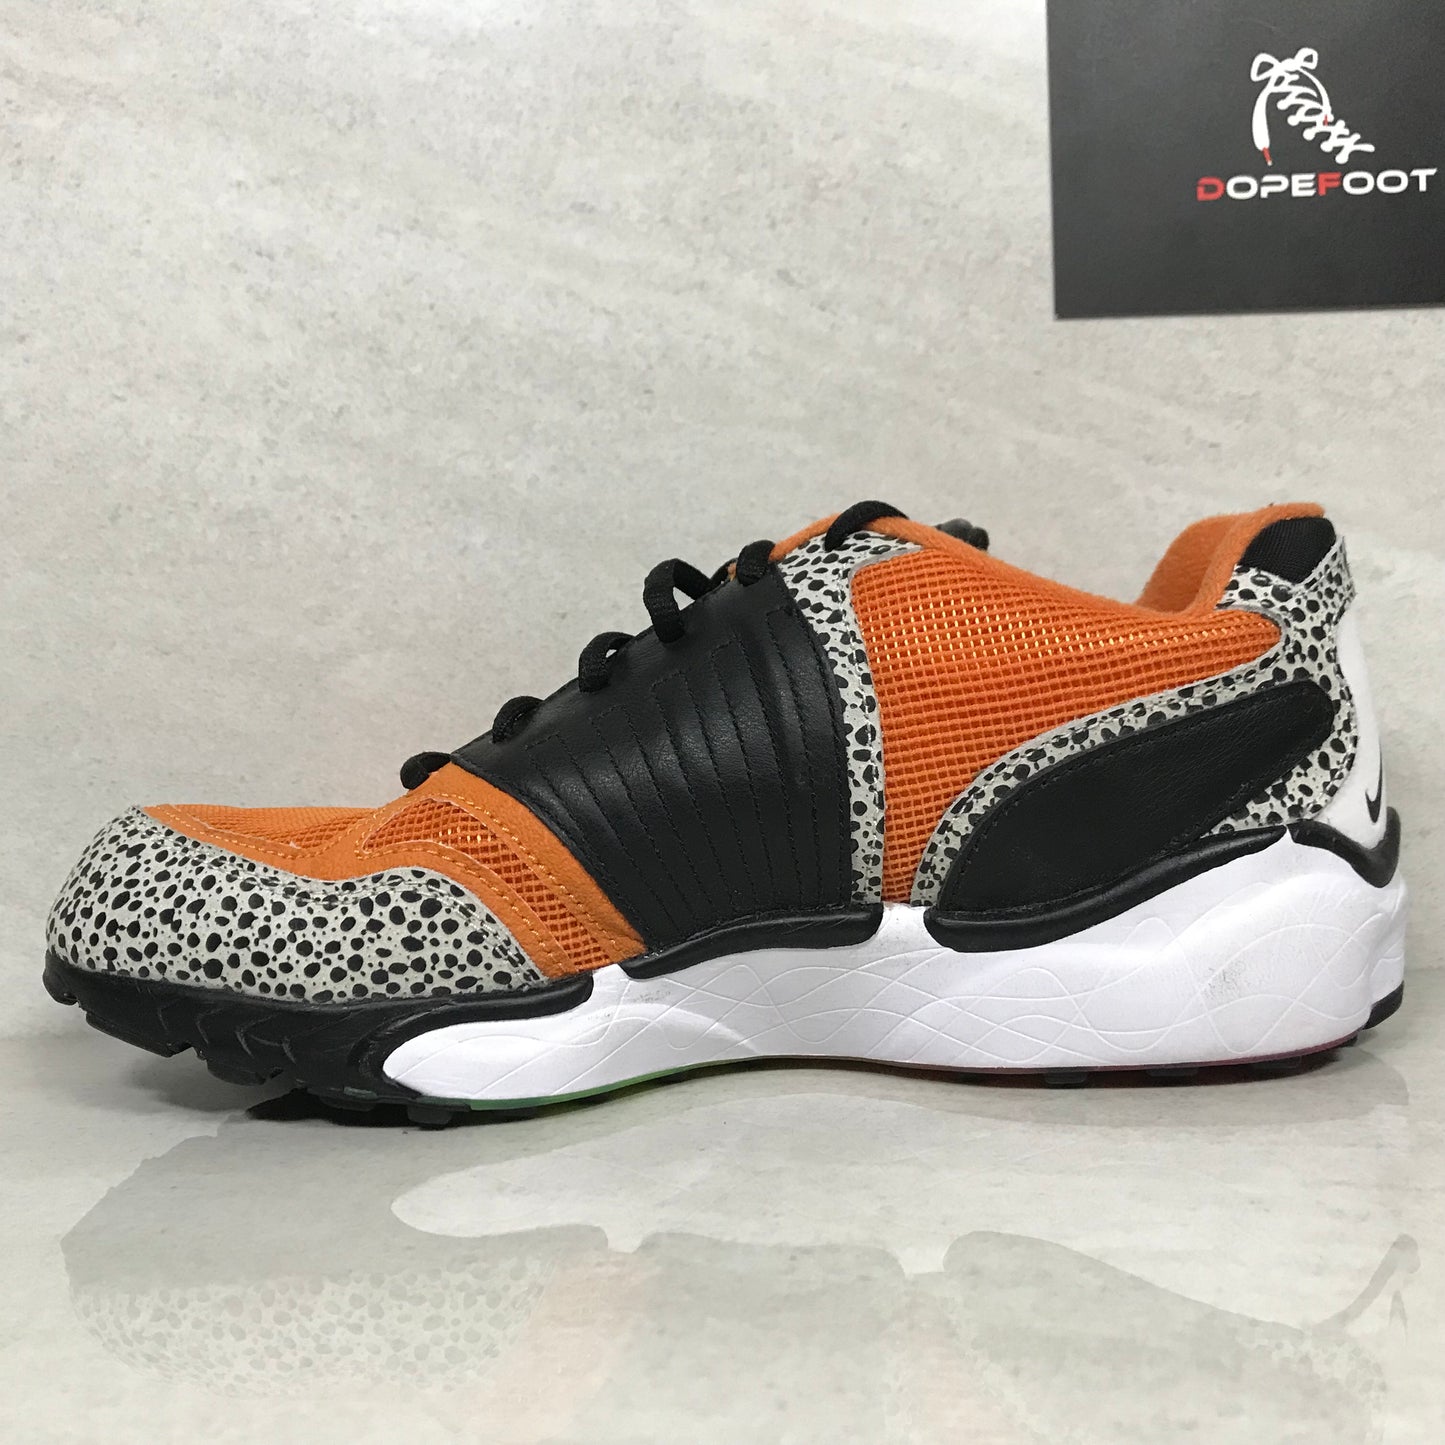 Nike Air Zoom Talaria Safari Size 8